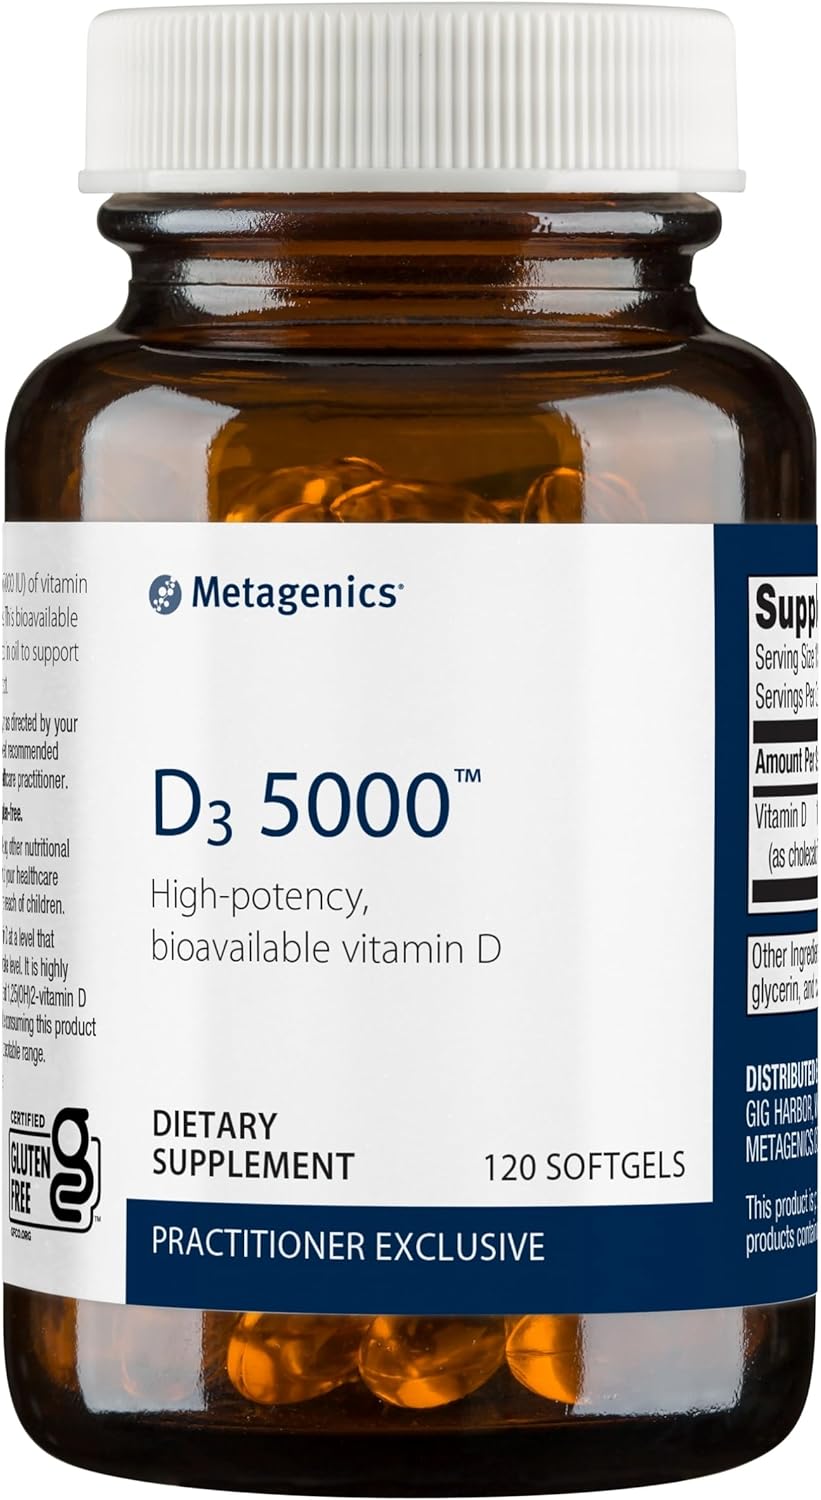 Metagenics Vitamin D3 5,000 IU - Vitamin D Supplement for Healthy Bone